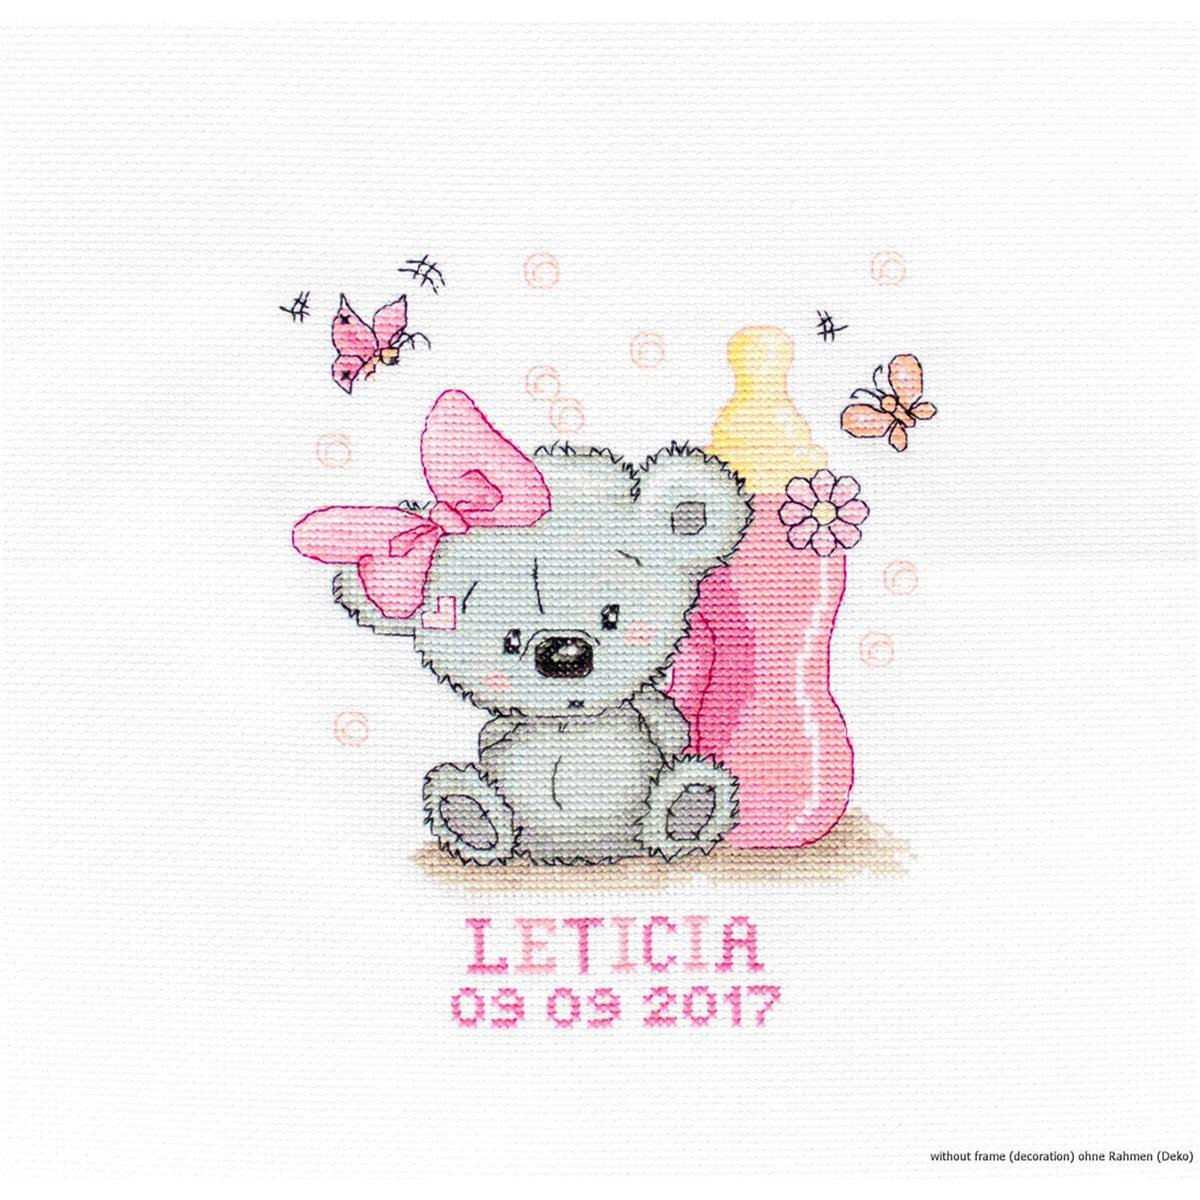 A cross stitch artwork shows a gray teddy bear with a...